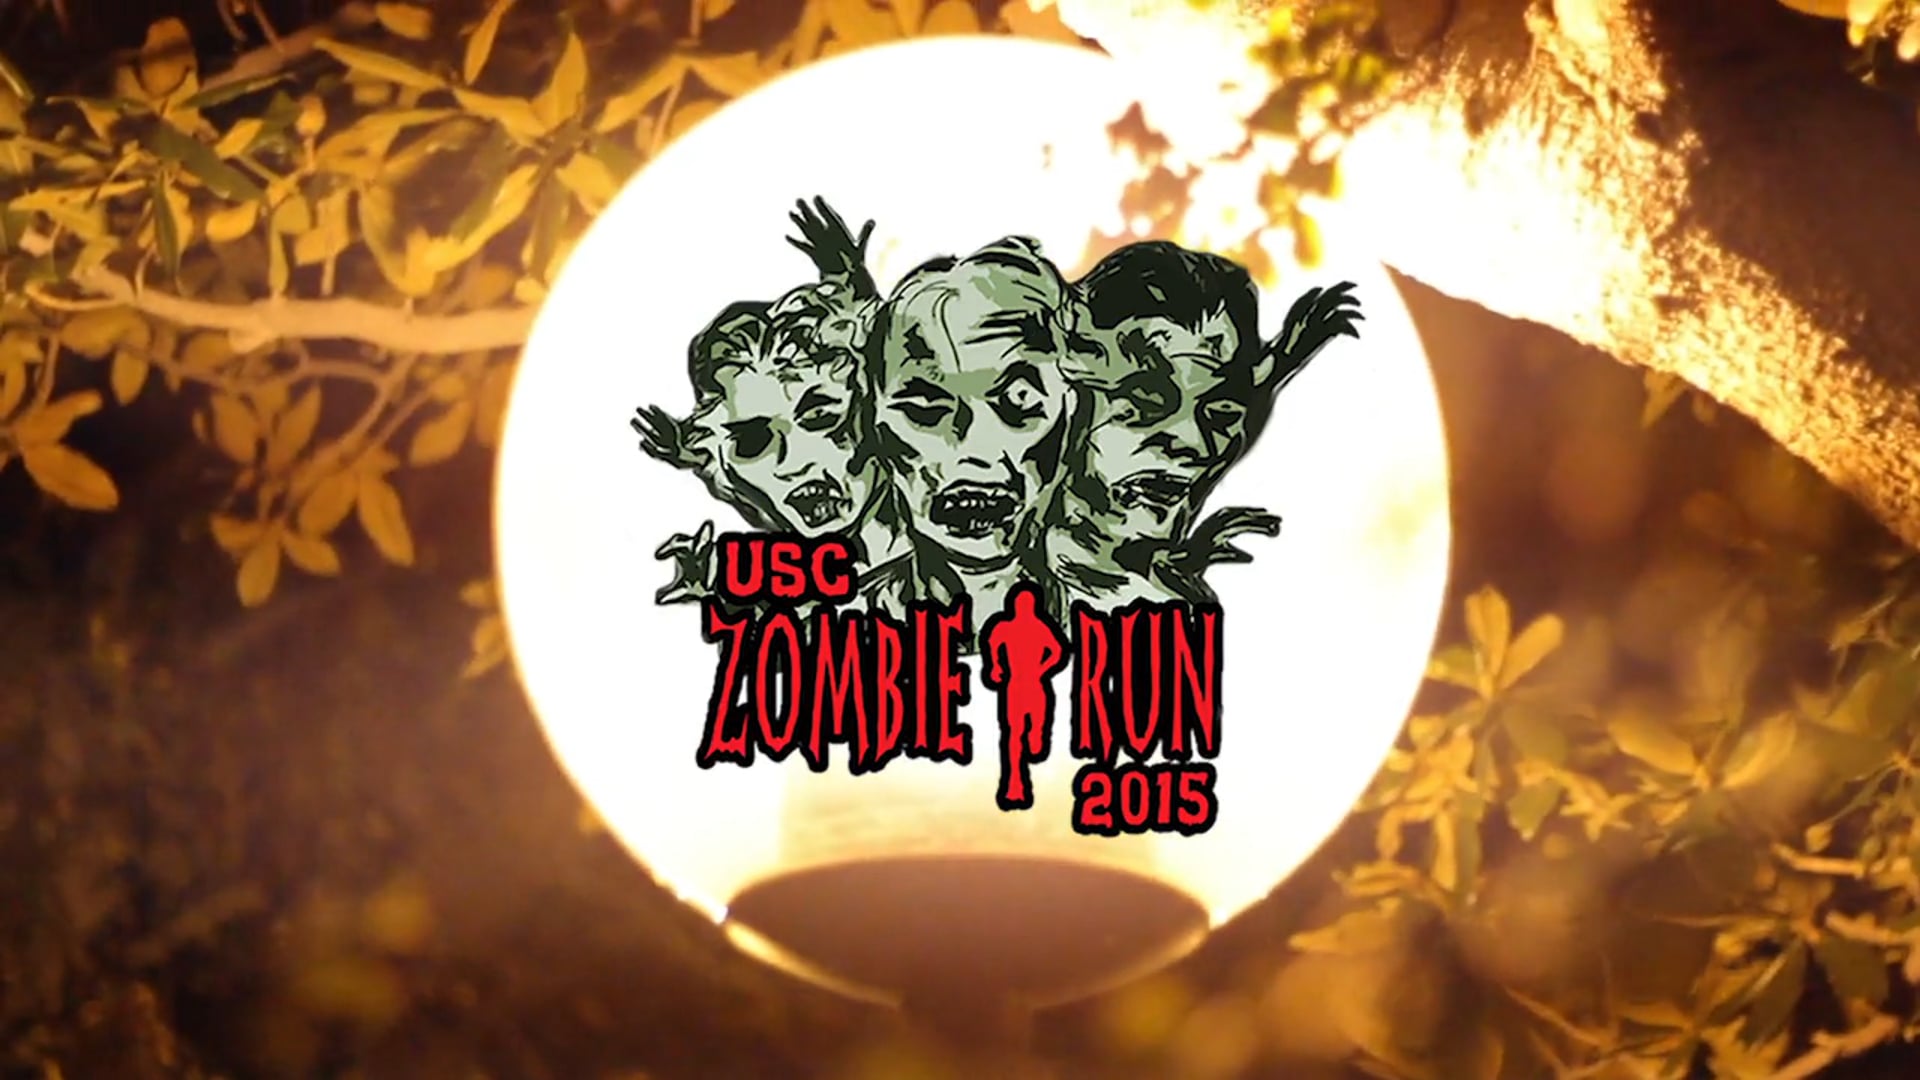 USC Zombie Run 5K 2015